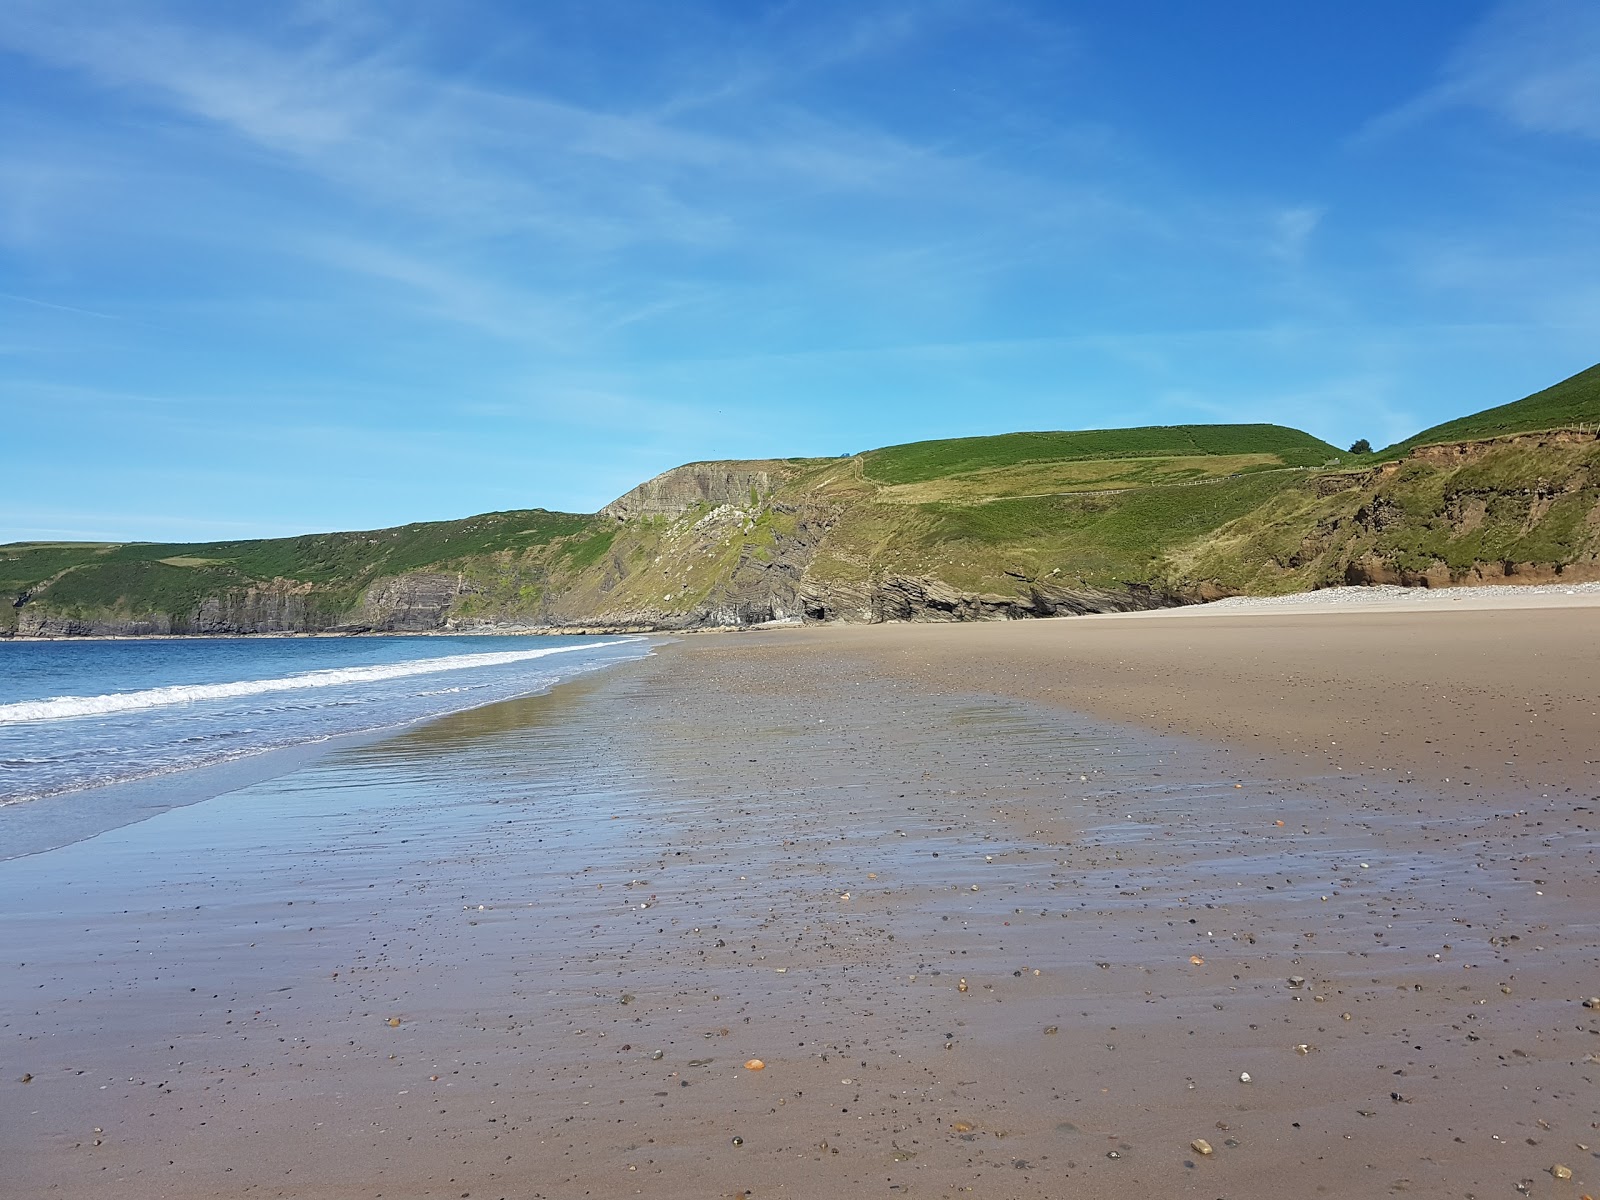 Traeth Porth Ceiriad'in fotoğrafı geniş plaj ile birlikte